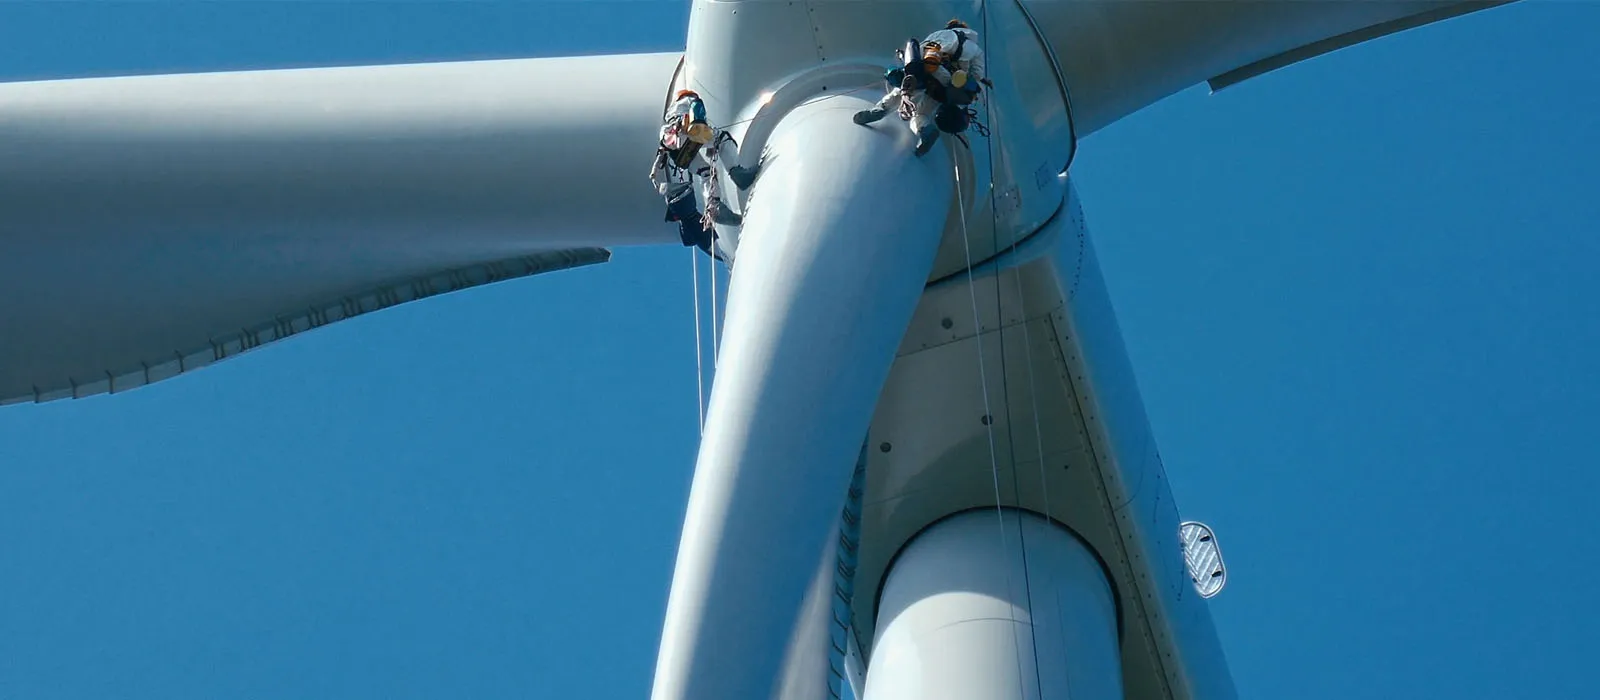 How to Become a Wind Turbine Technician